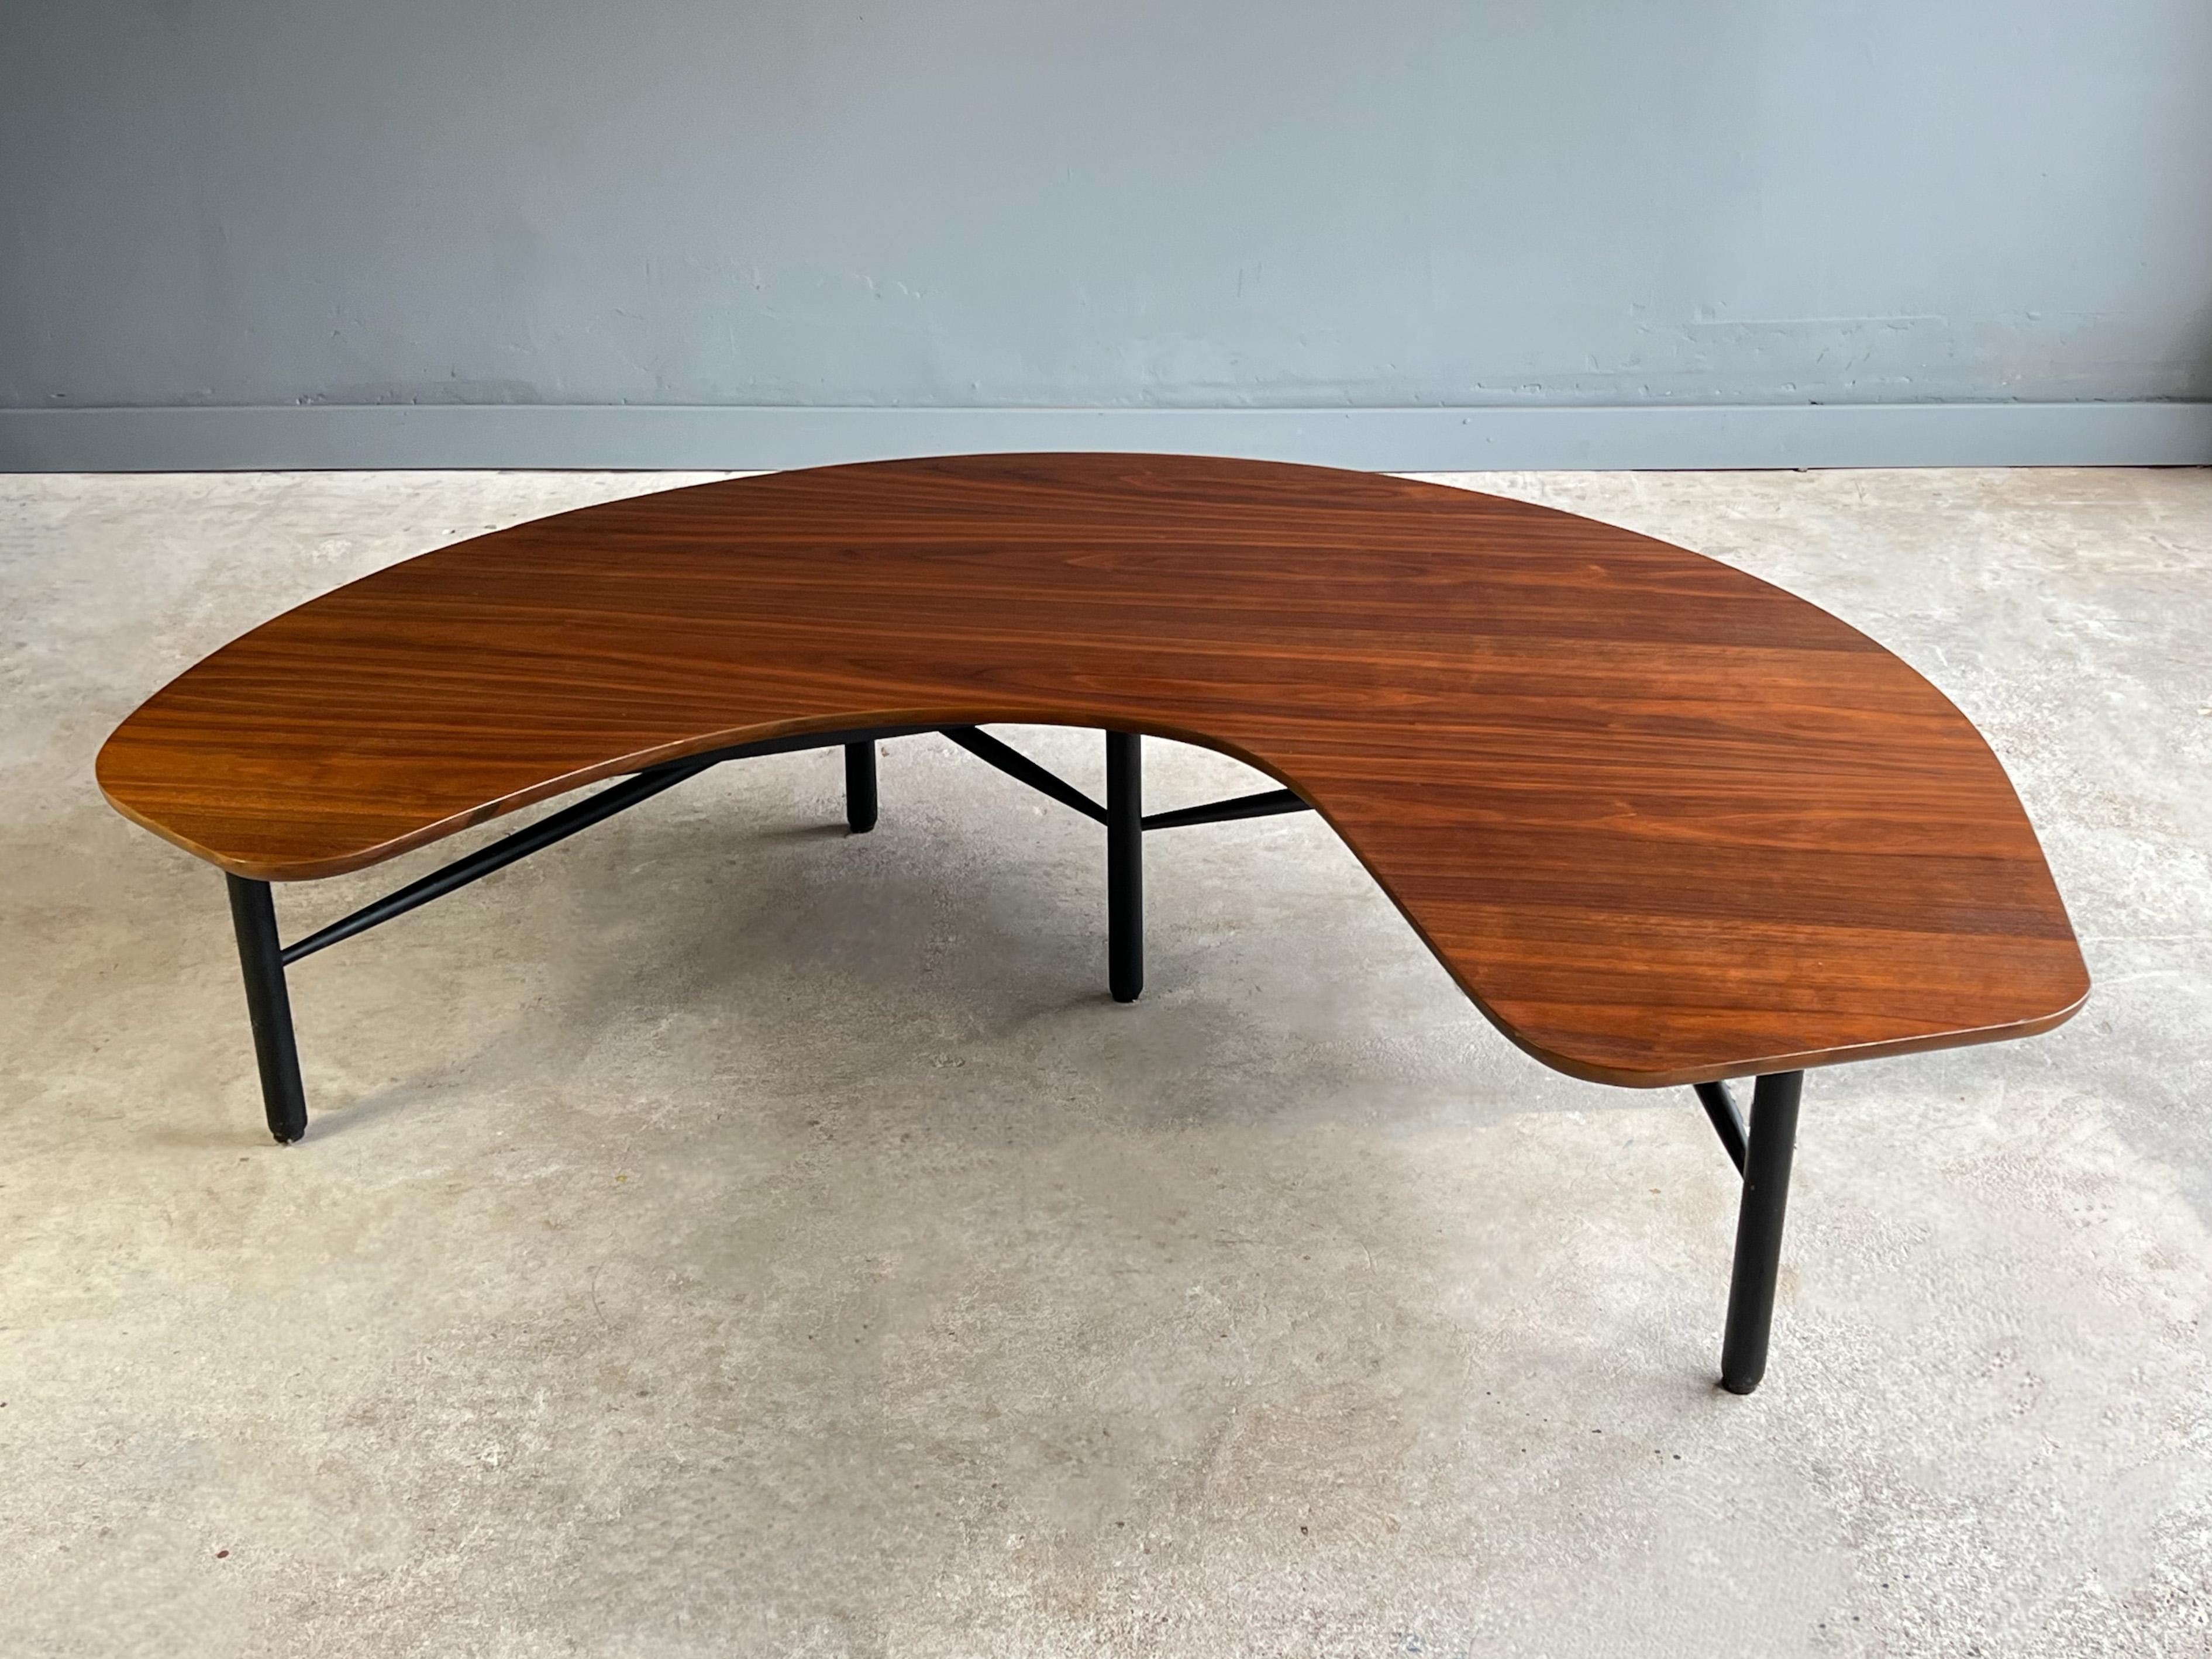 Wood Organic “Crescent Moon” Coffee Table by Greta Grossman for Glenn of California  For Sale